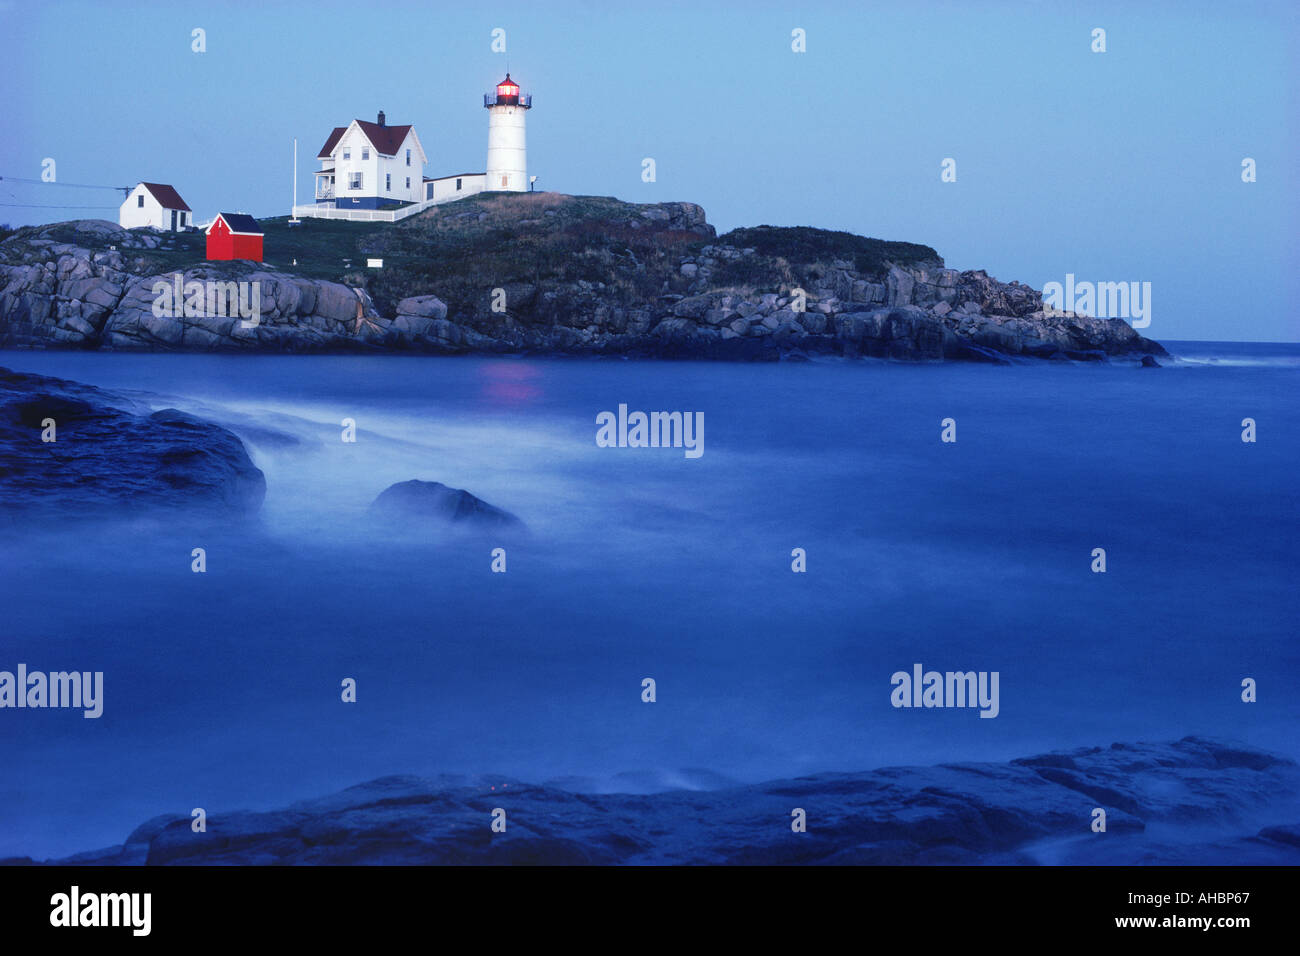 Cape Neddick Lighthouse at York Maine at night Stock Photo